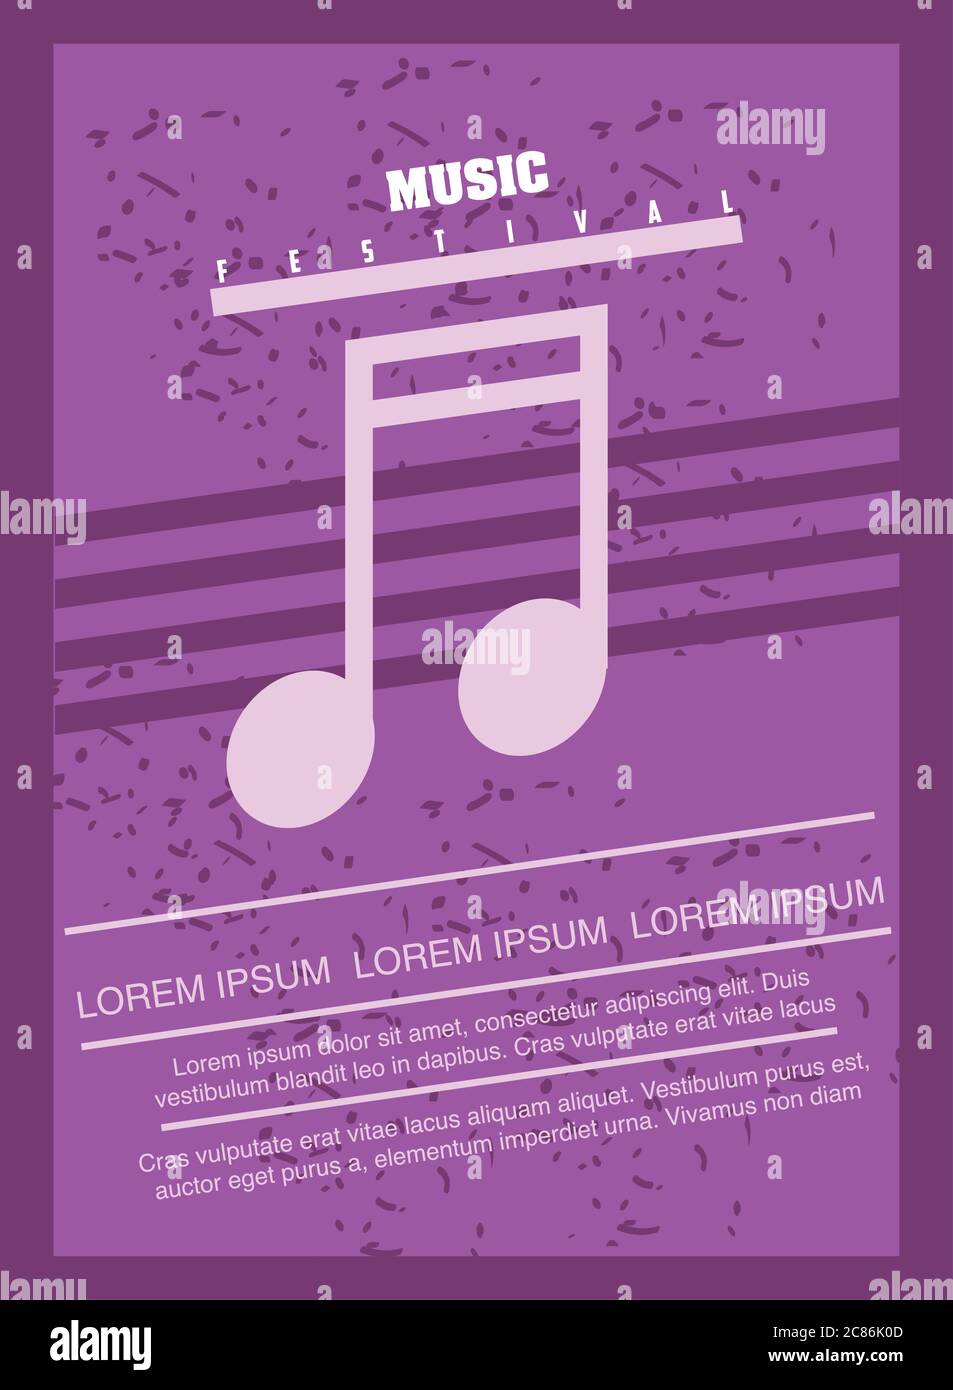 Plakat Musik Festival, musikalische kreative Einladung Vektor Illustration Design Stock Vektor